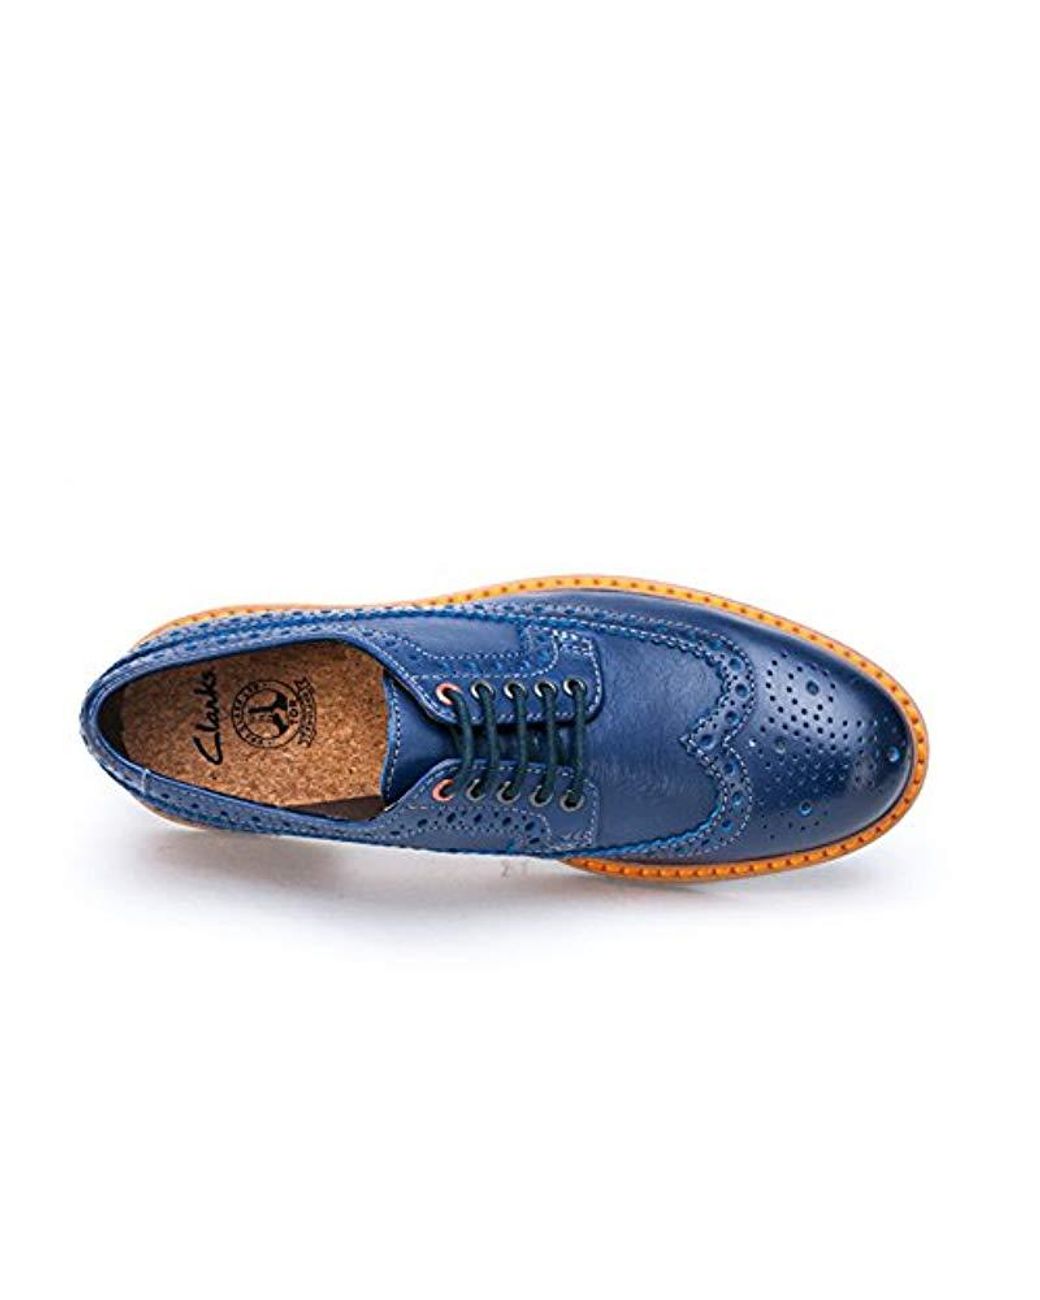 Clarks Darby Limit Blue Leather Brogue Shoe Uk-6.5 G Eu-40 M for Men | Lyst  UK